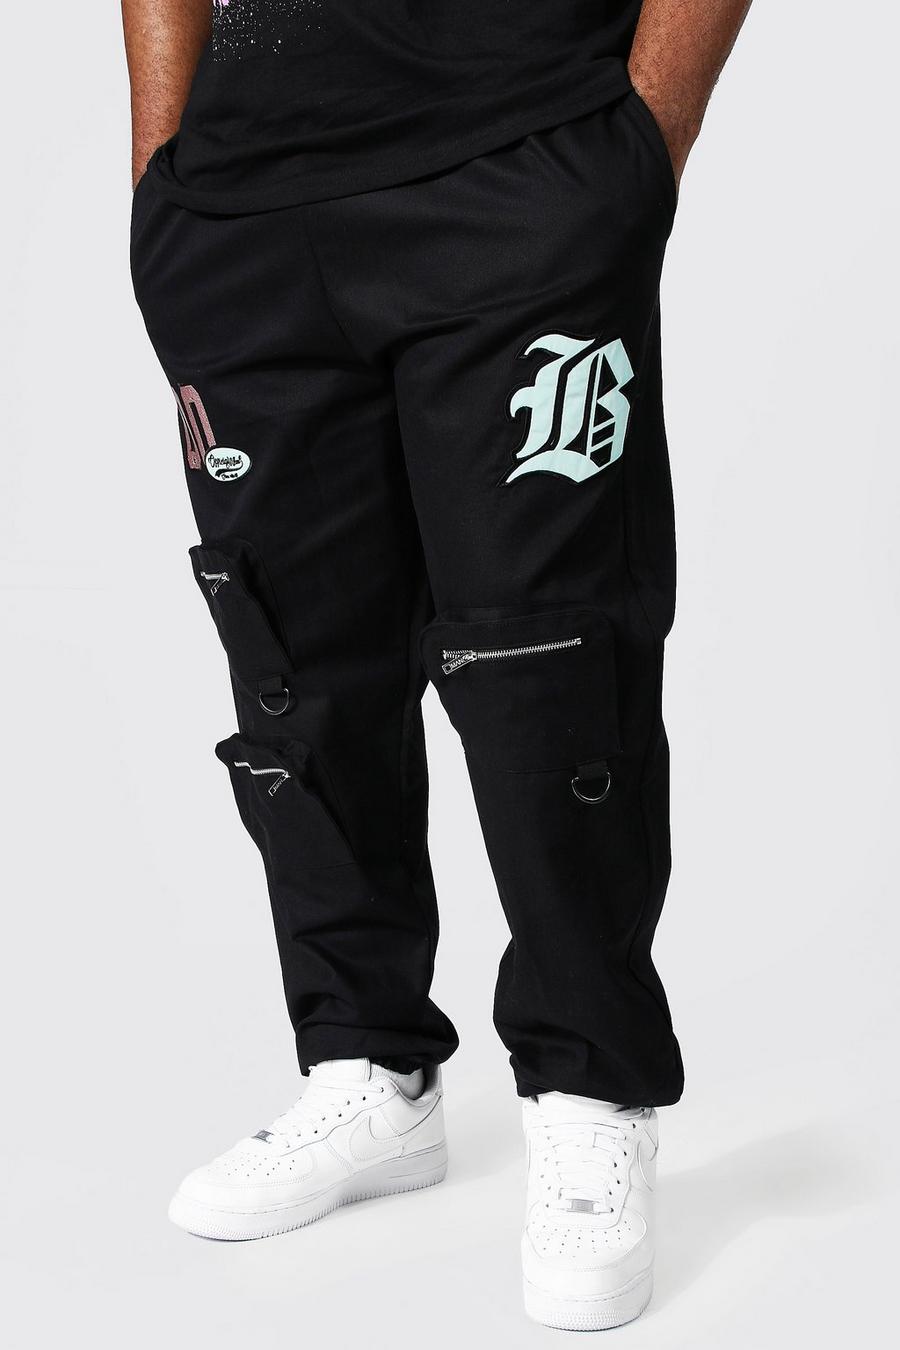 Pantaloni tuta Cargo Plus Size stile Varsity con tasca frontale, Black